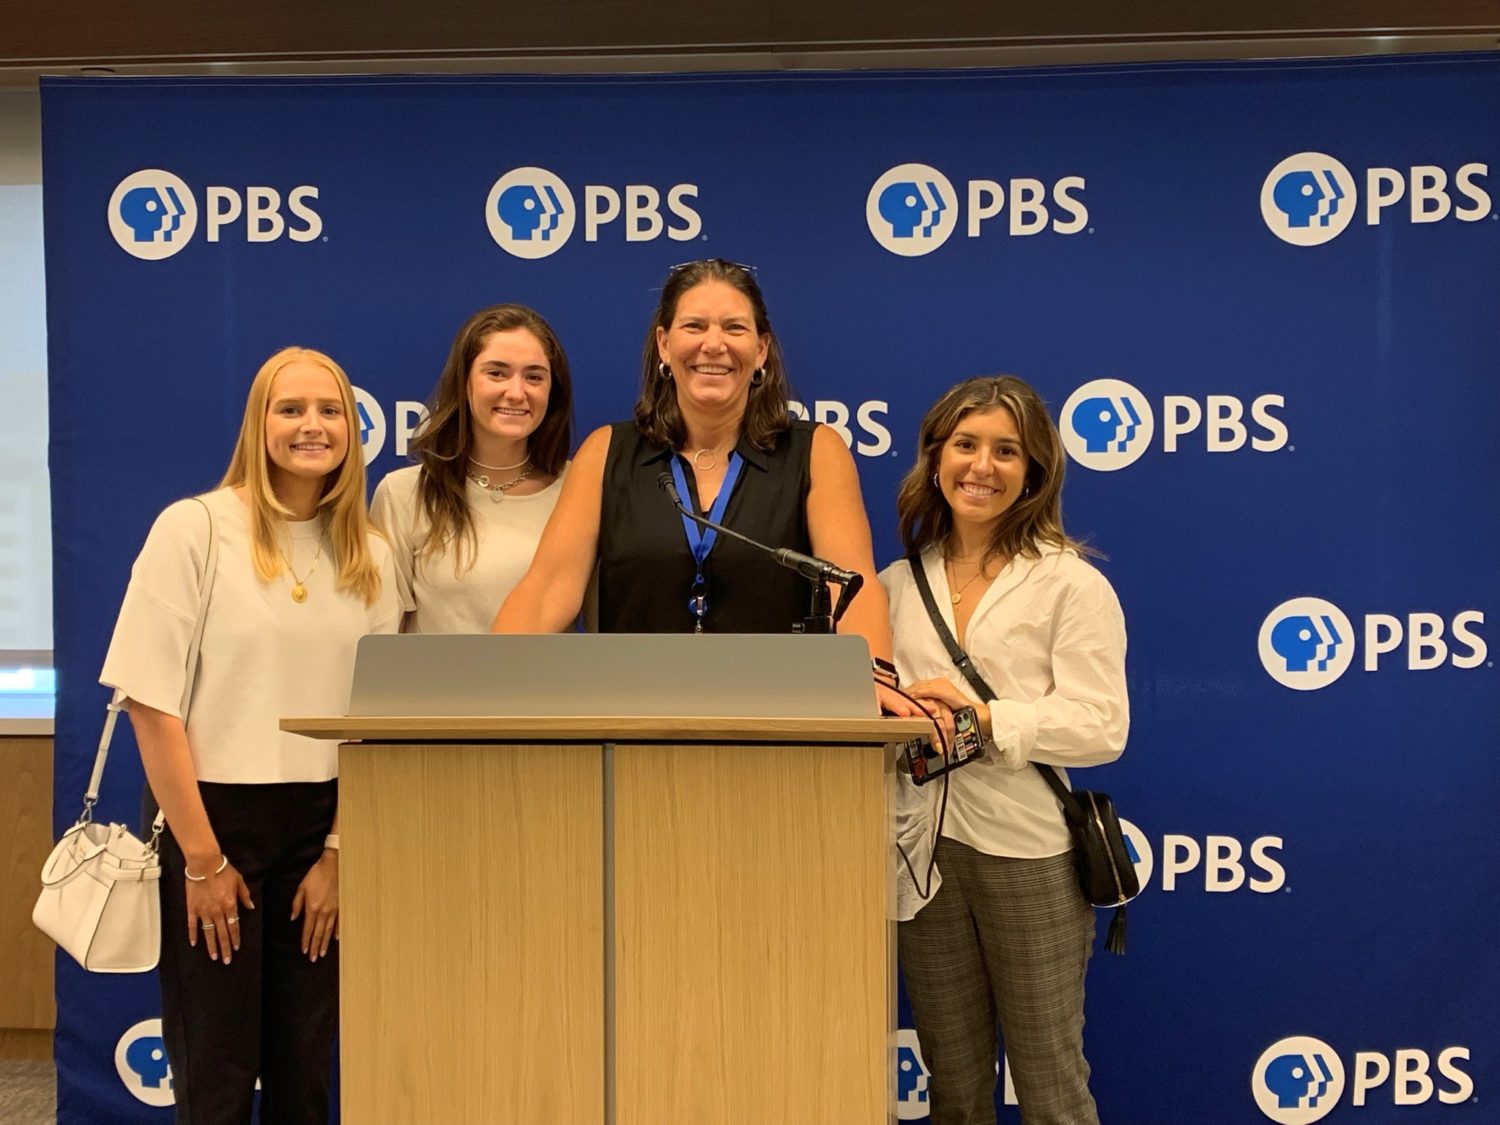 PBS interns starting their careers